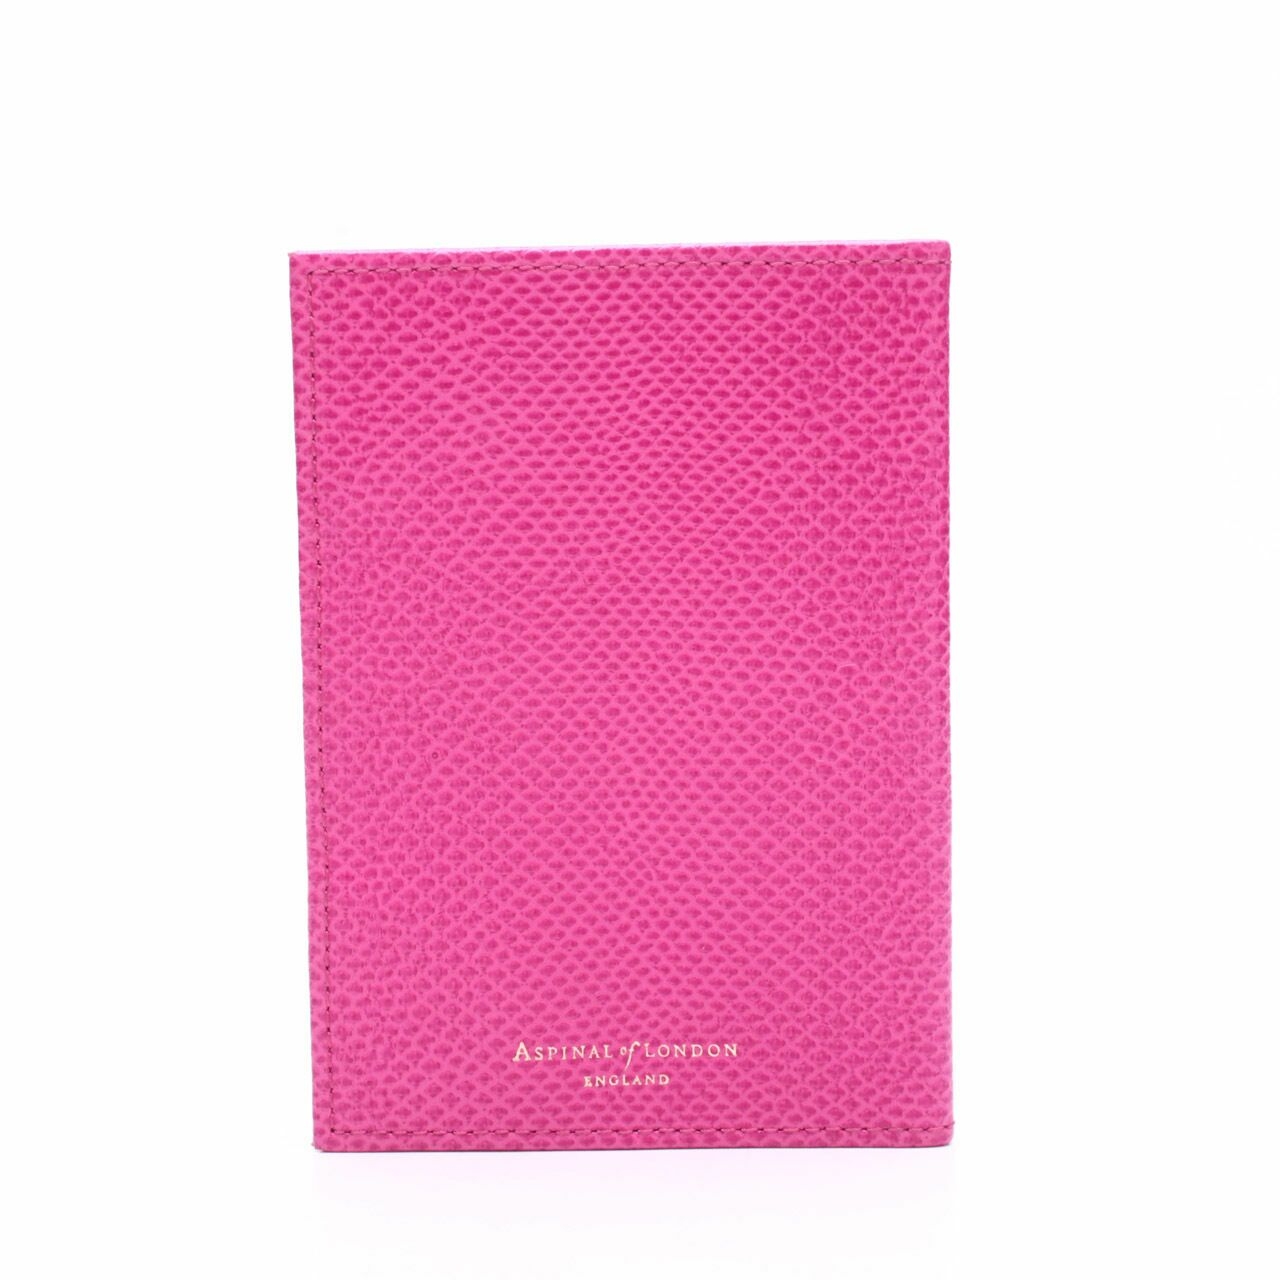 Aspinal of London Pink Passport Holder Wallet